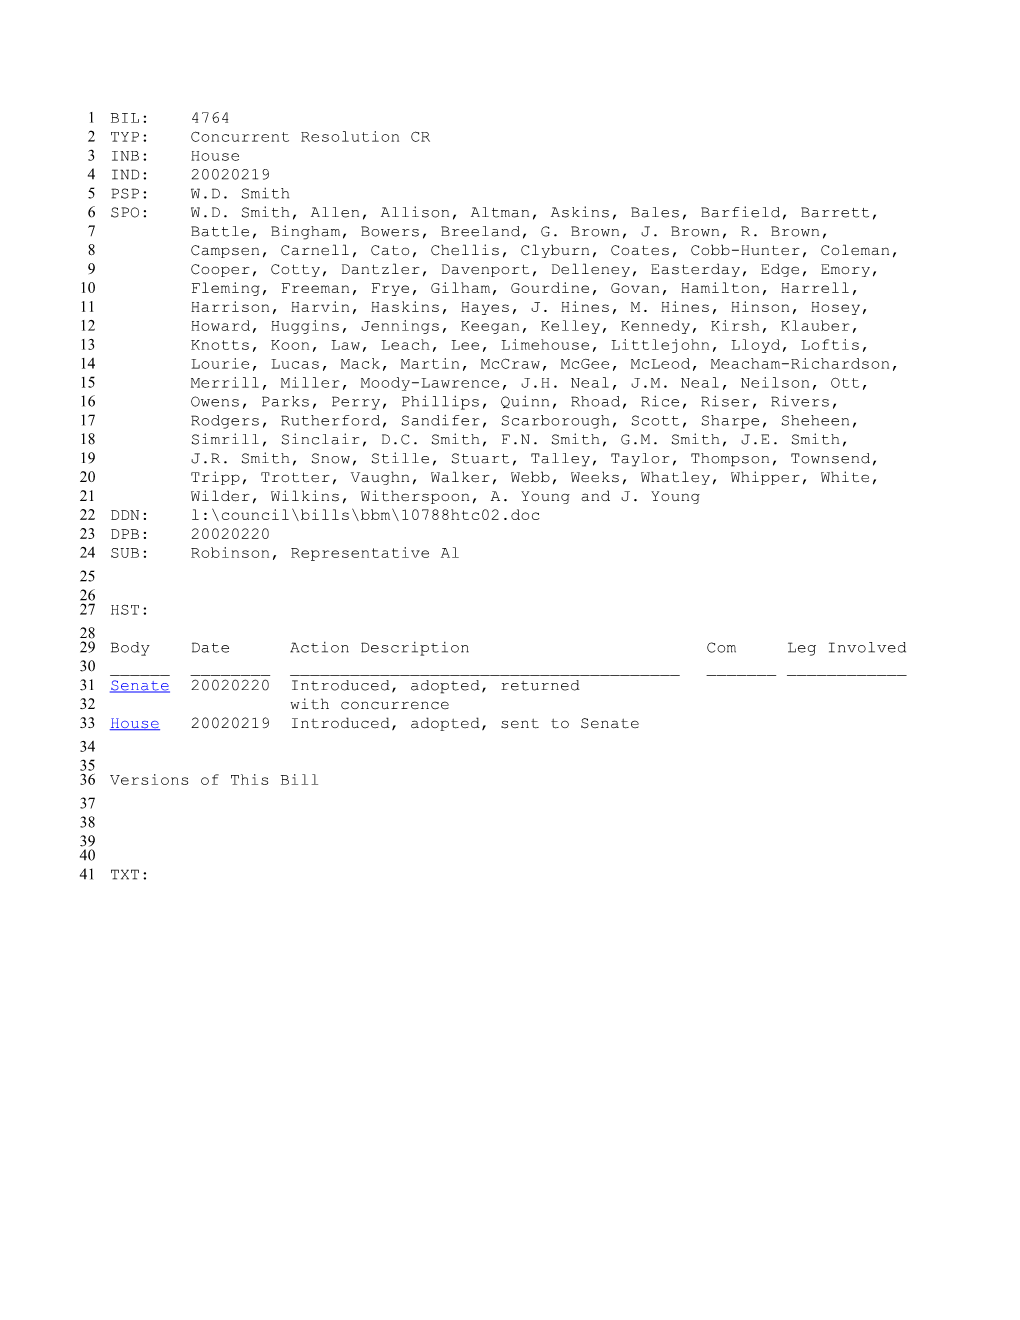 2001-2002 Bill 4764: Robinson, Representative Al - South Carolina Legislature Online